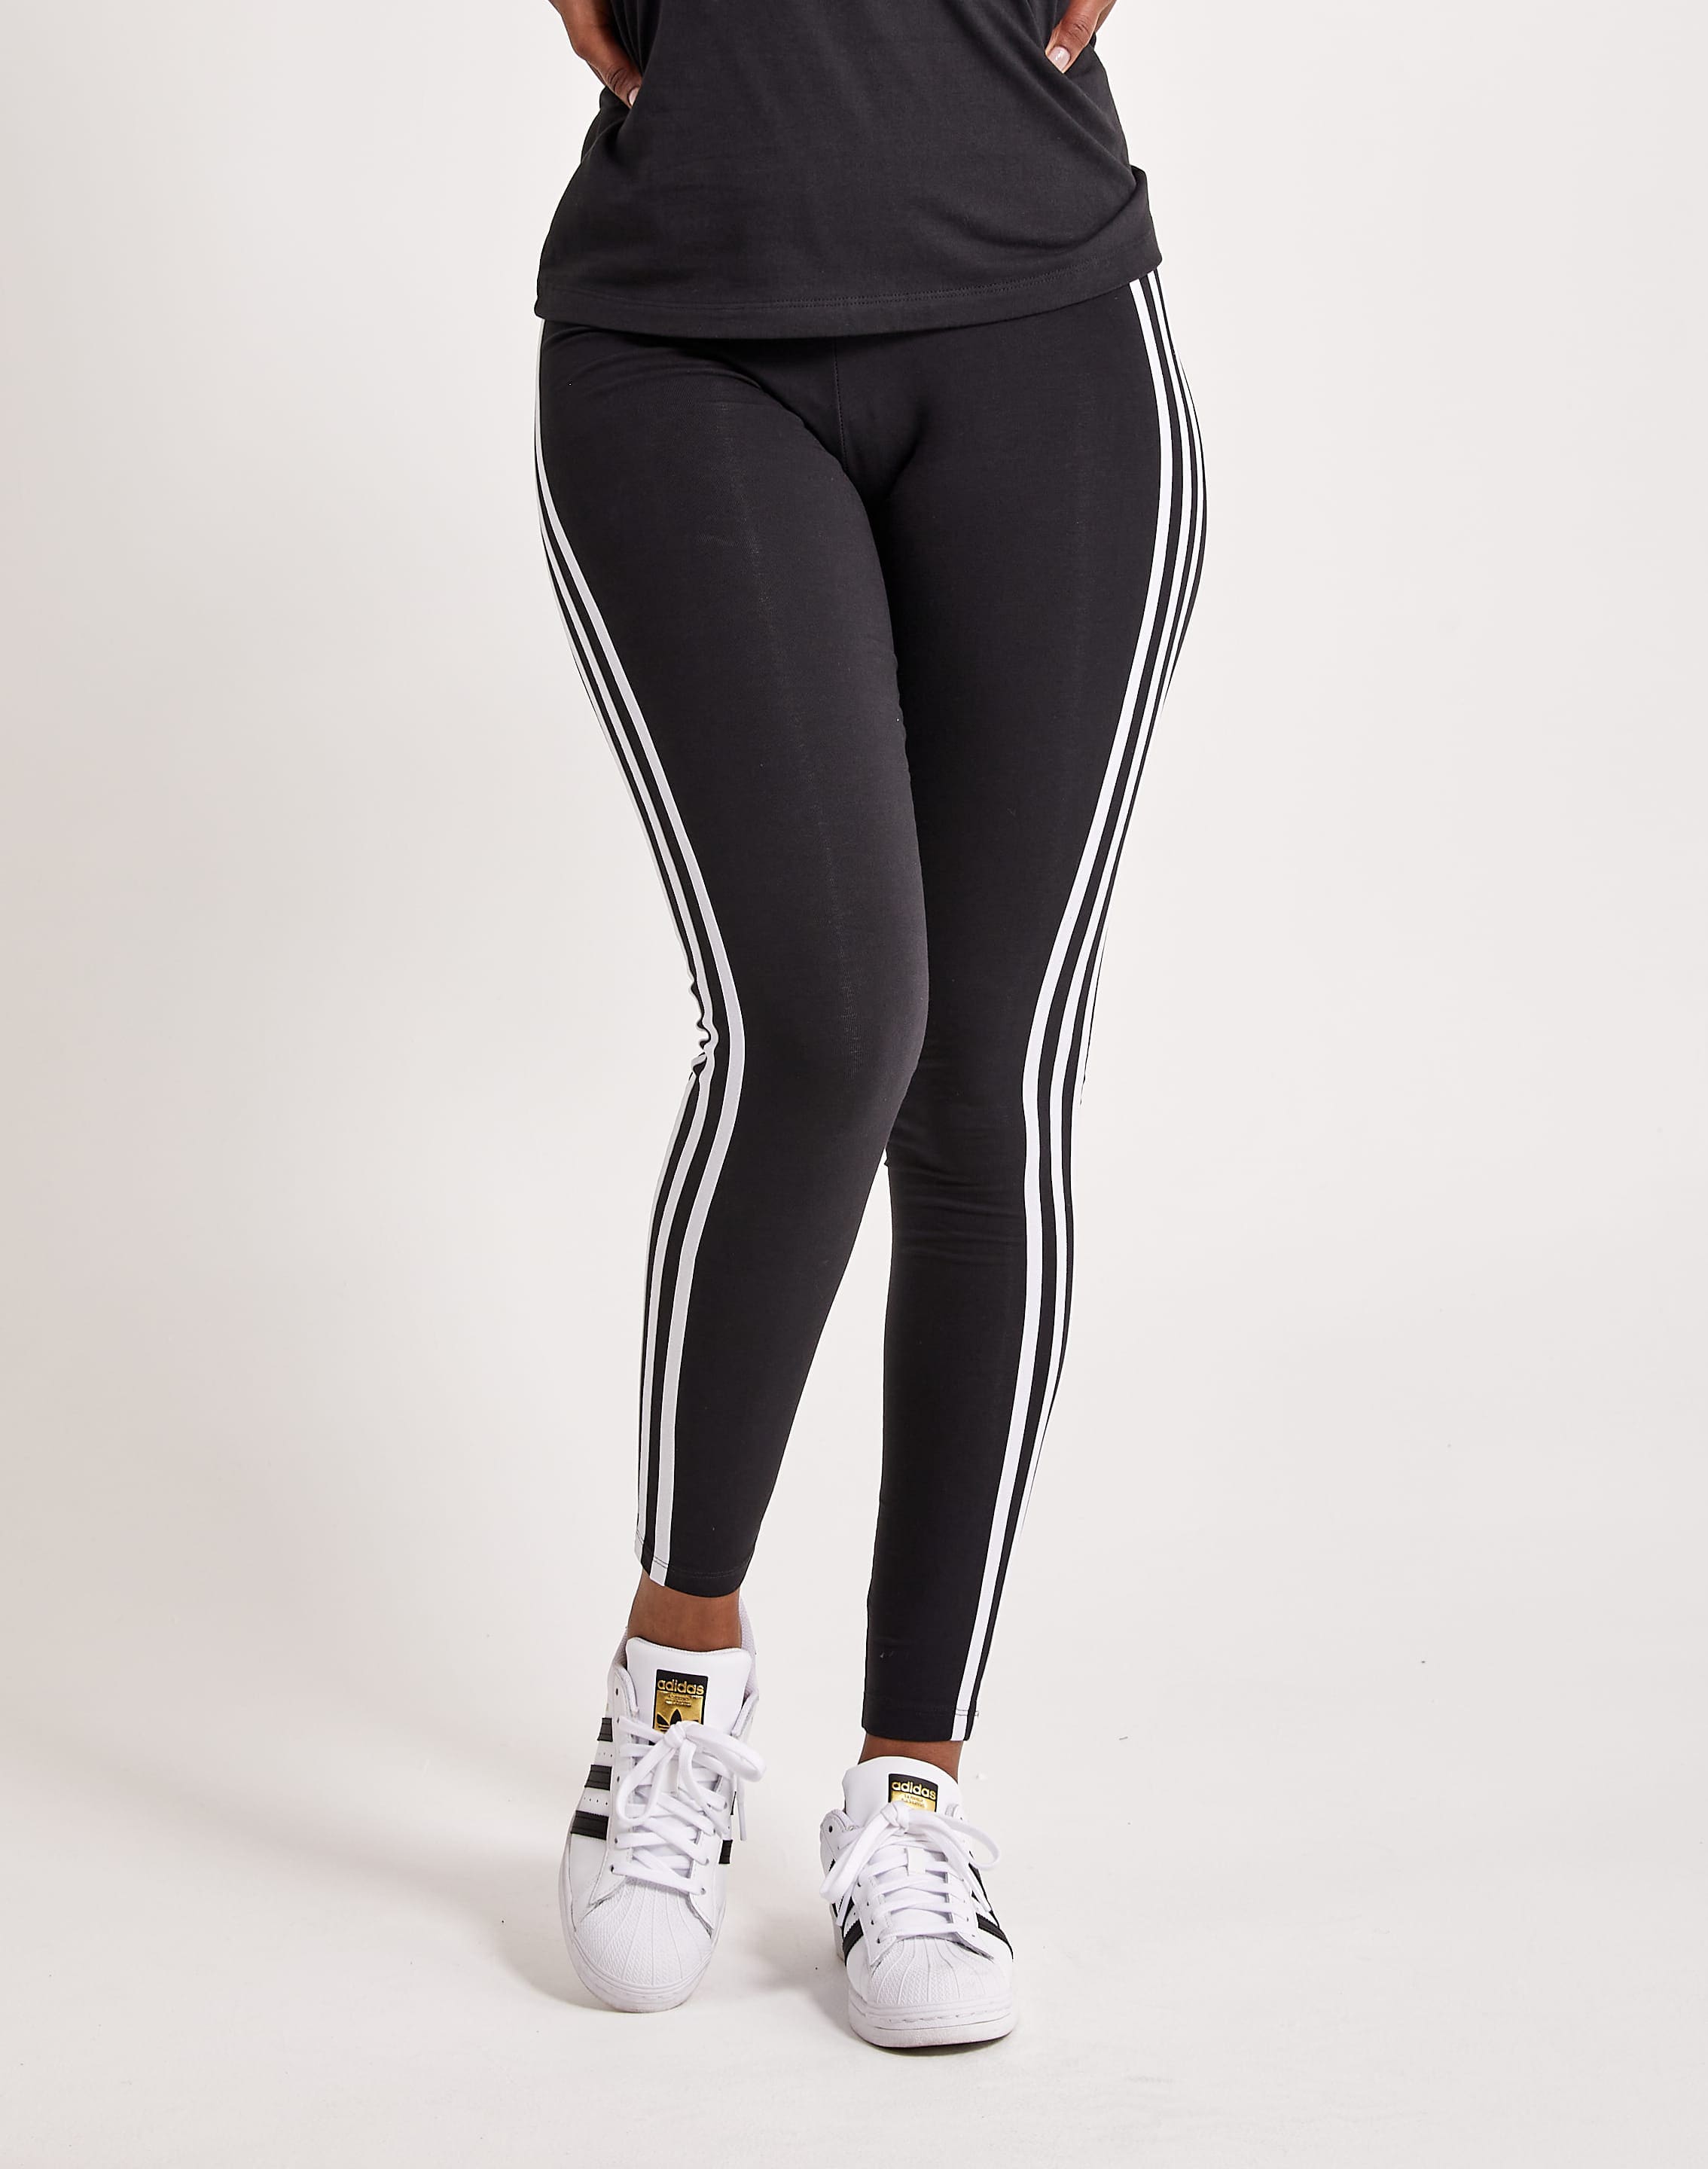 Faulty Adidas 3 Stripes Womens Black Leggings Gym pants size 8,10